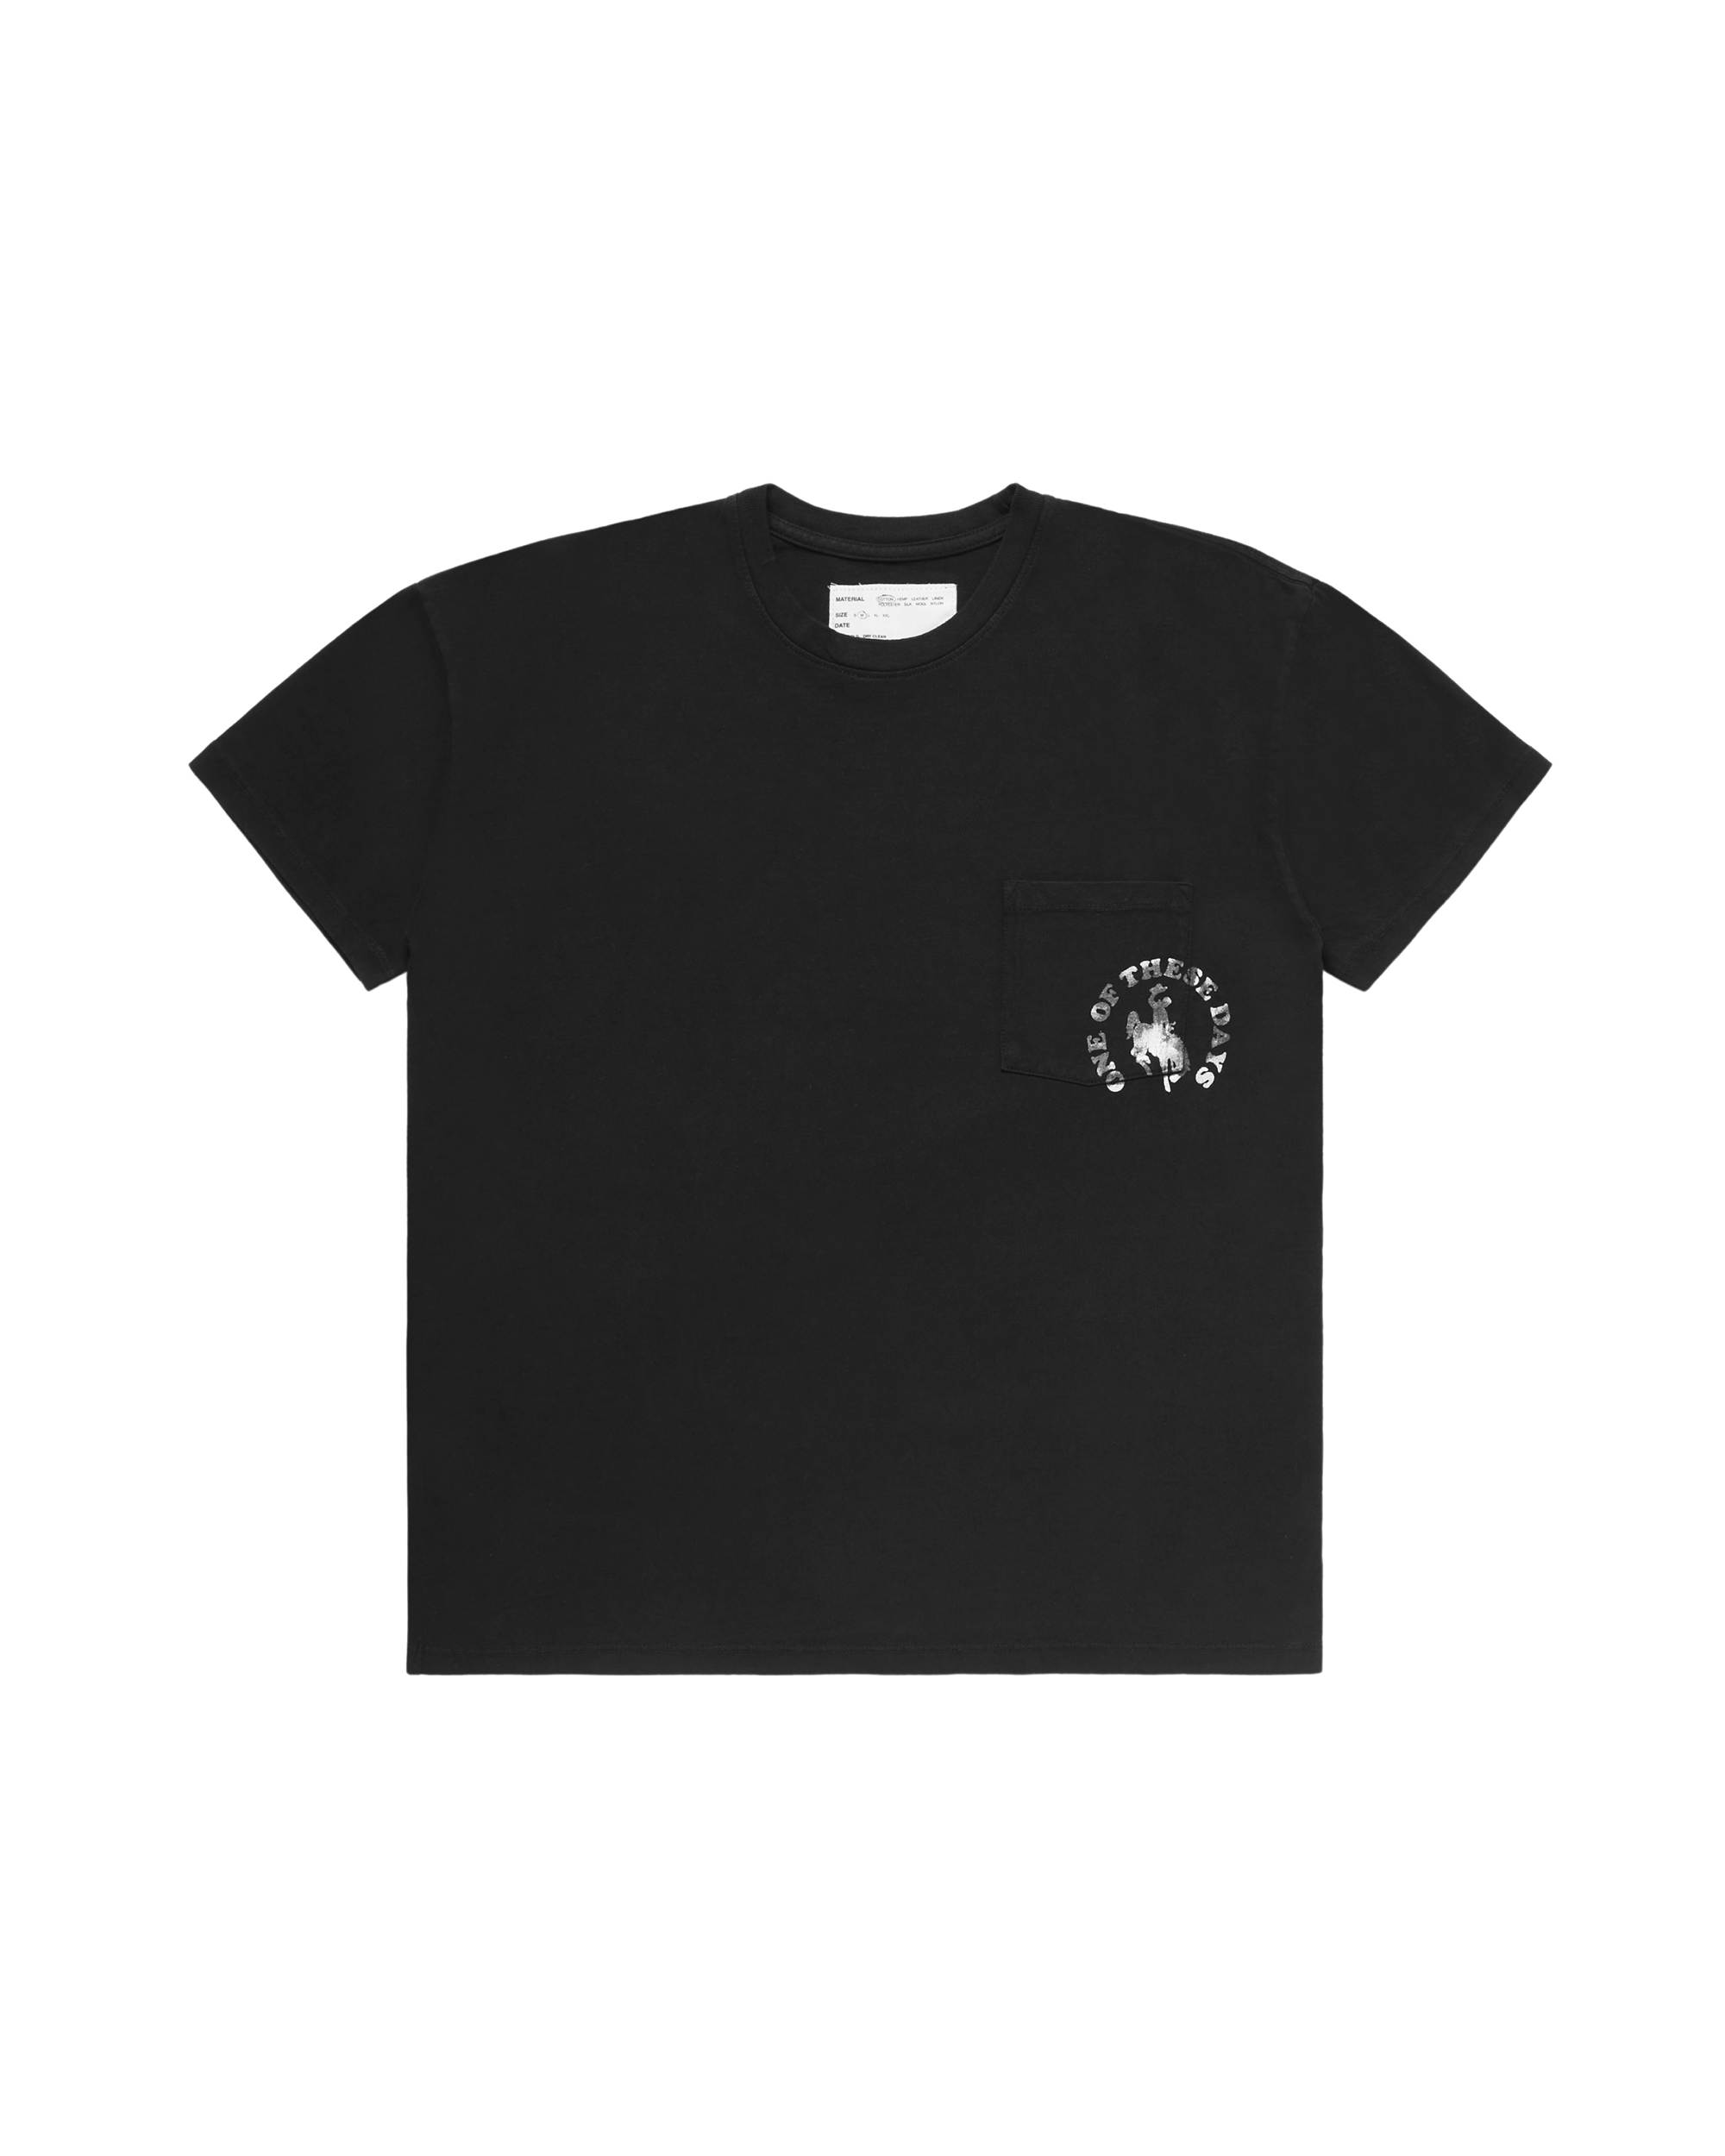 Cowboy Hippies Pocket T-shirt - Black